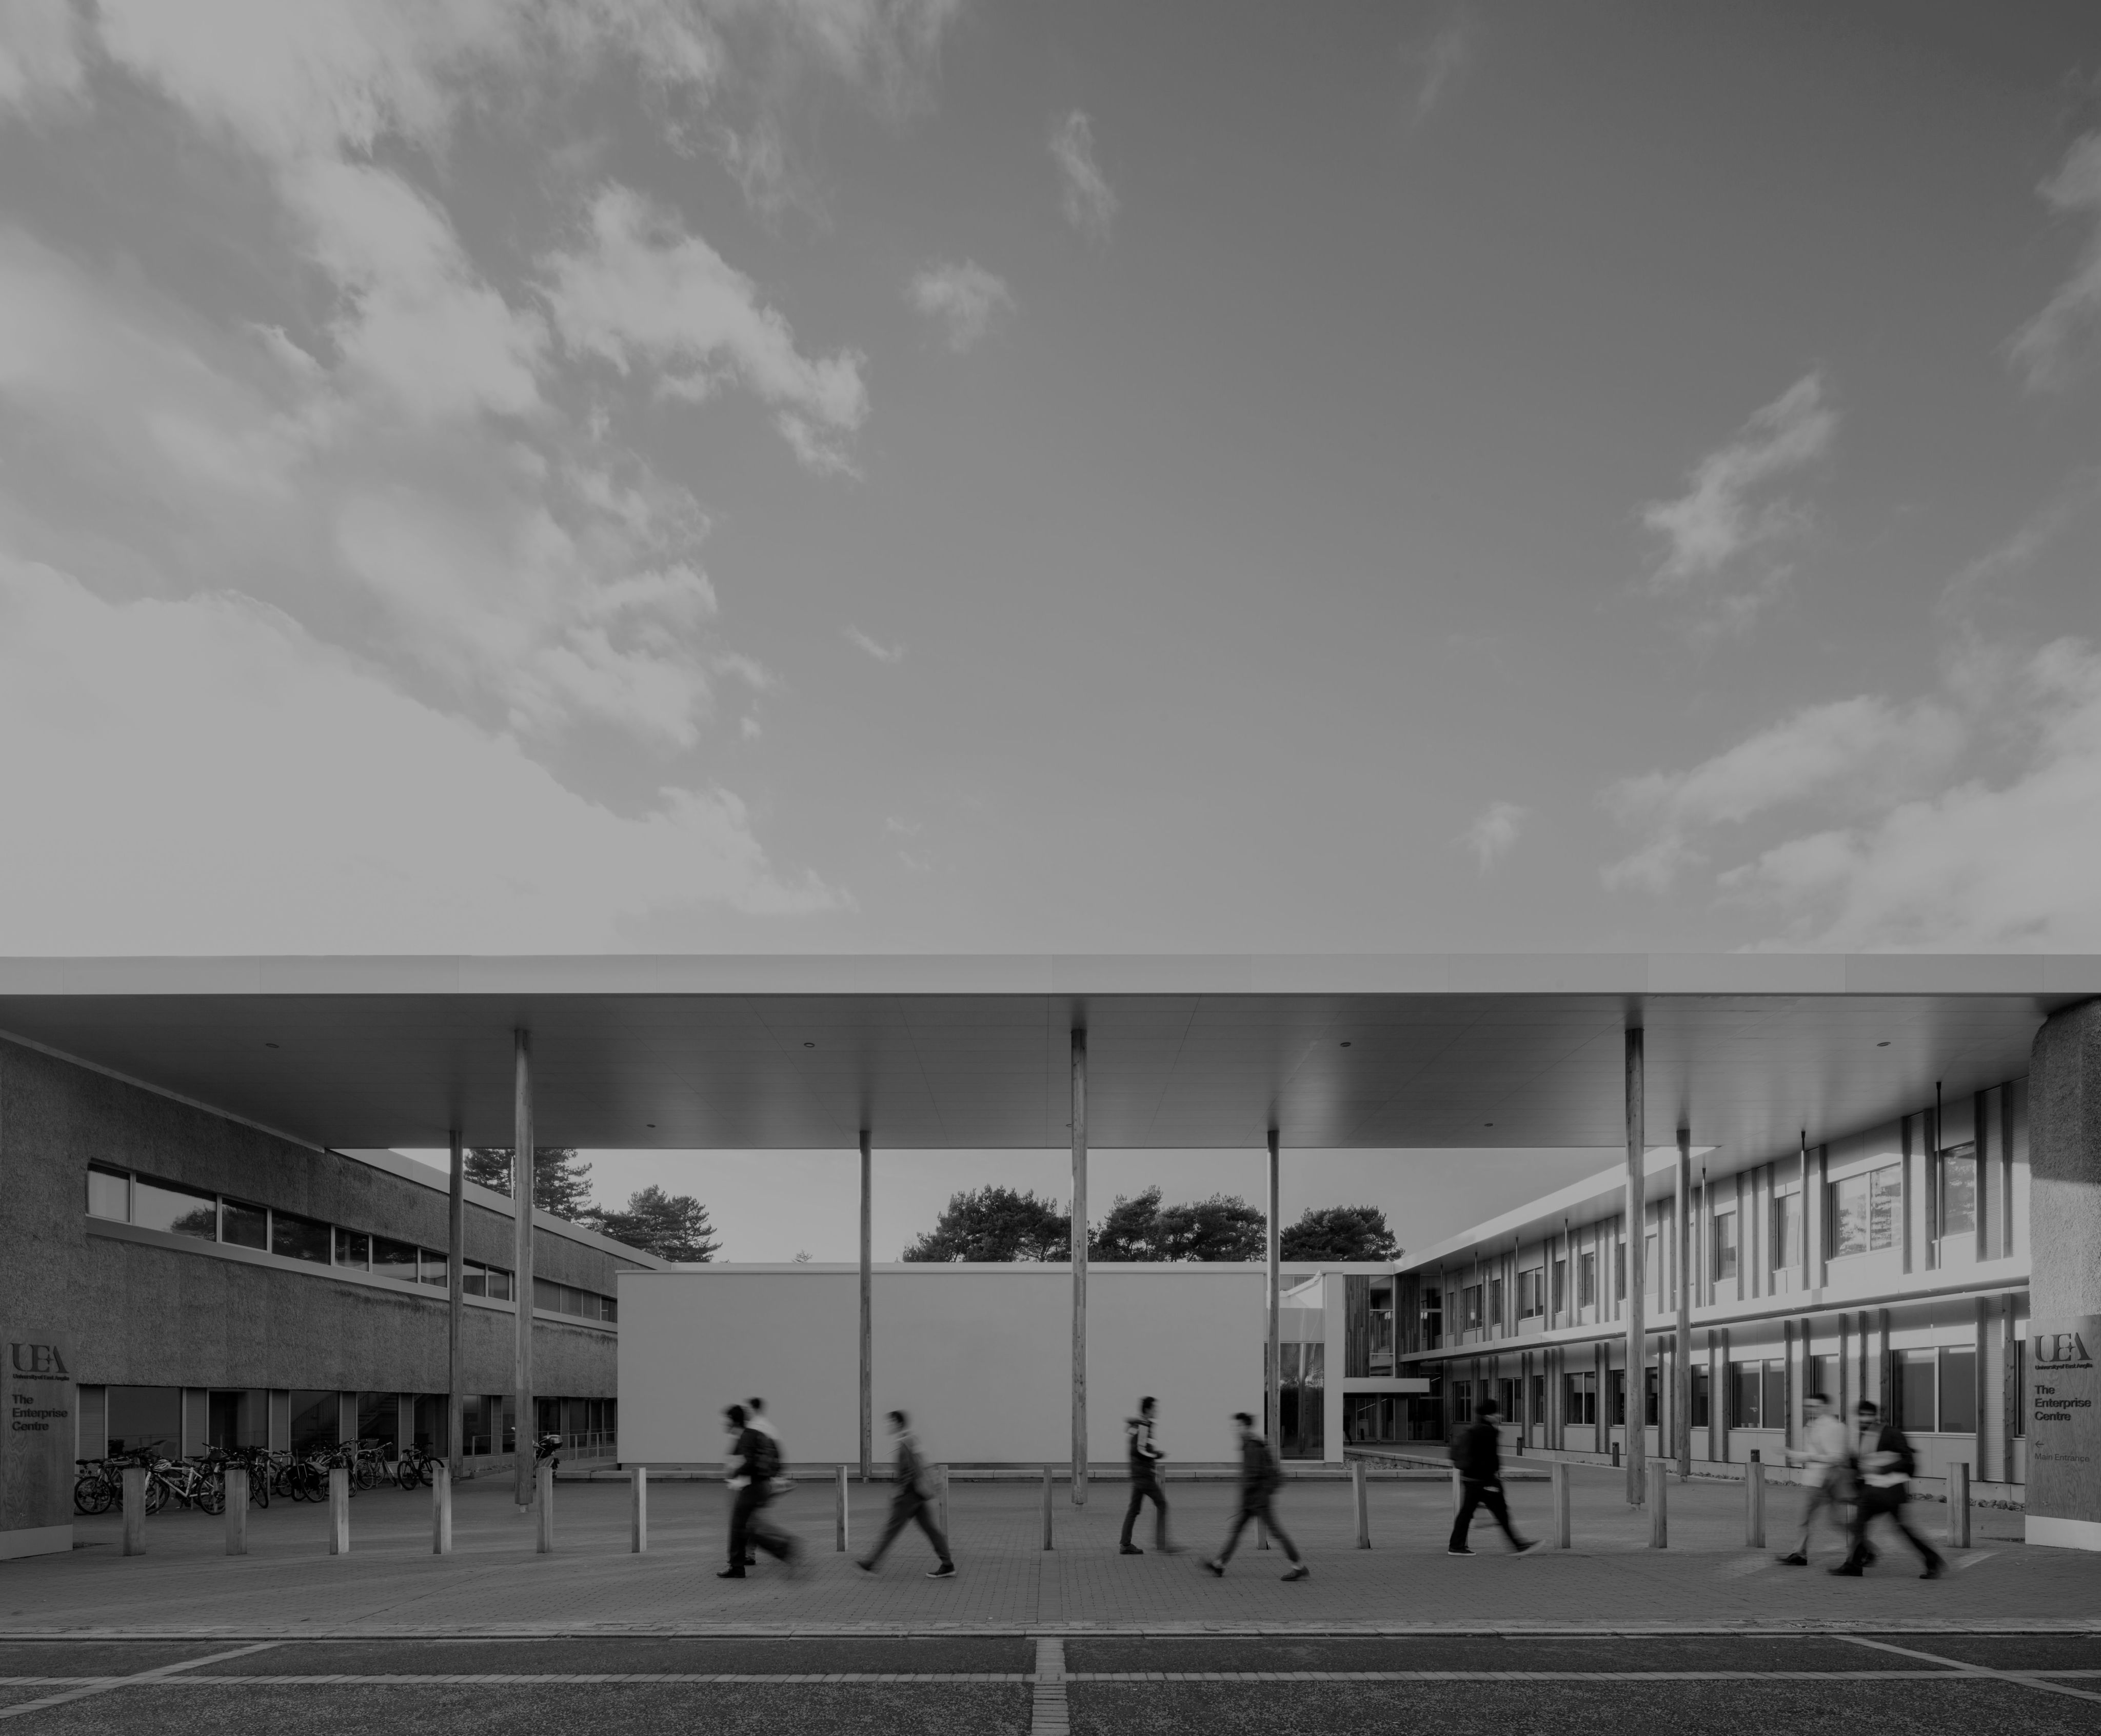 Blurred people walk through a modern building